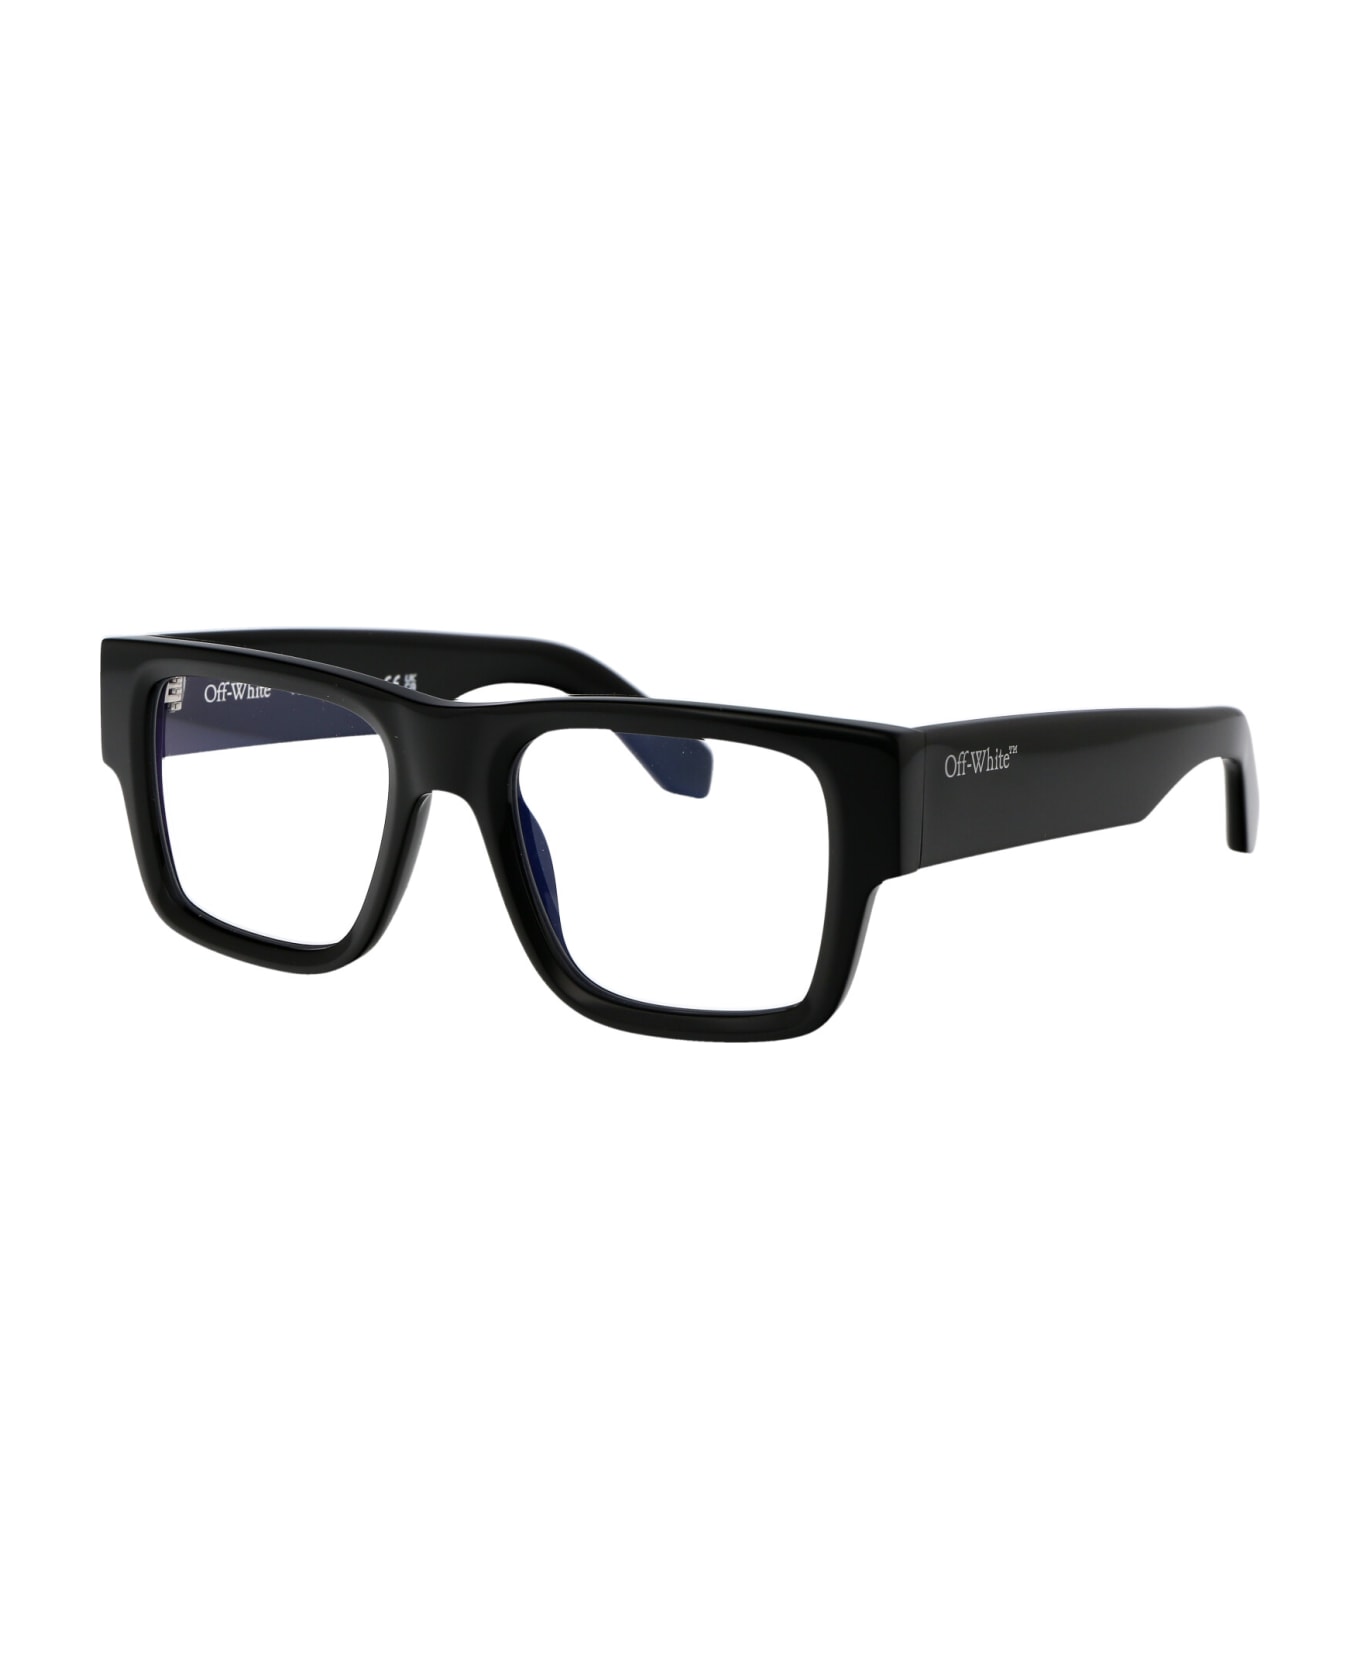 Off-White Optical Style 40 Glasses - 1000 BLACK